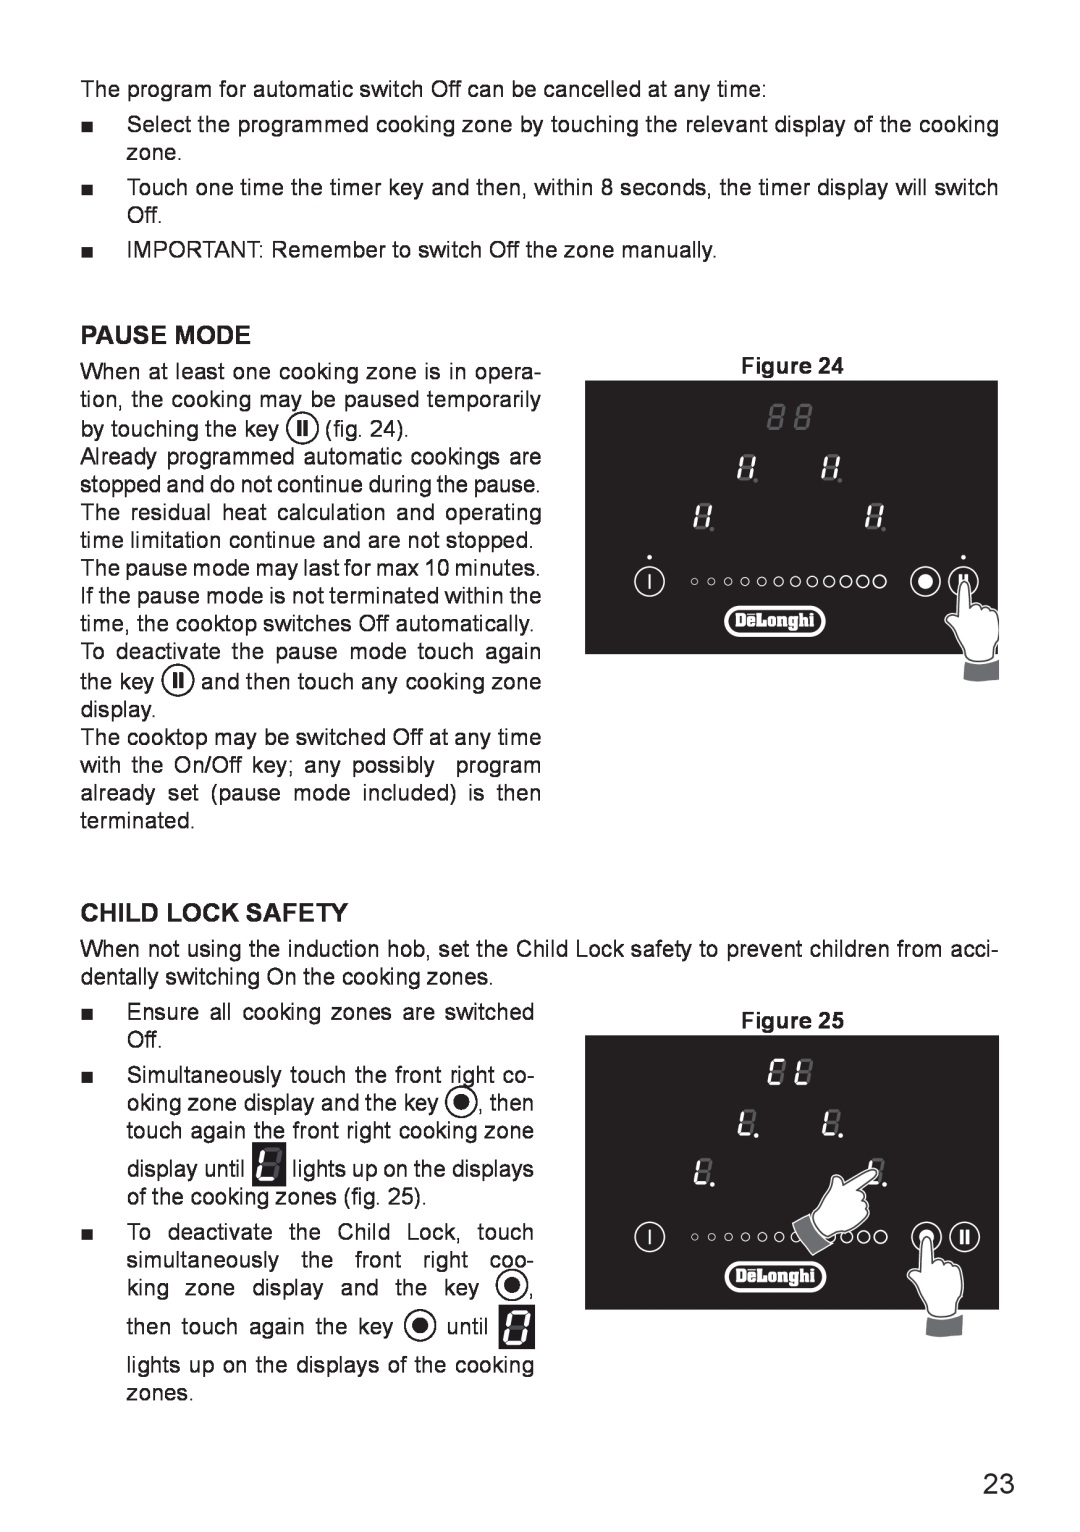 DeLonghi DEIND804, DEIND603, DEIND604 manual Pause Mode, Child Lock Safety 